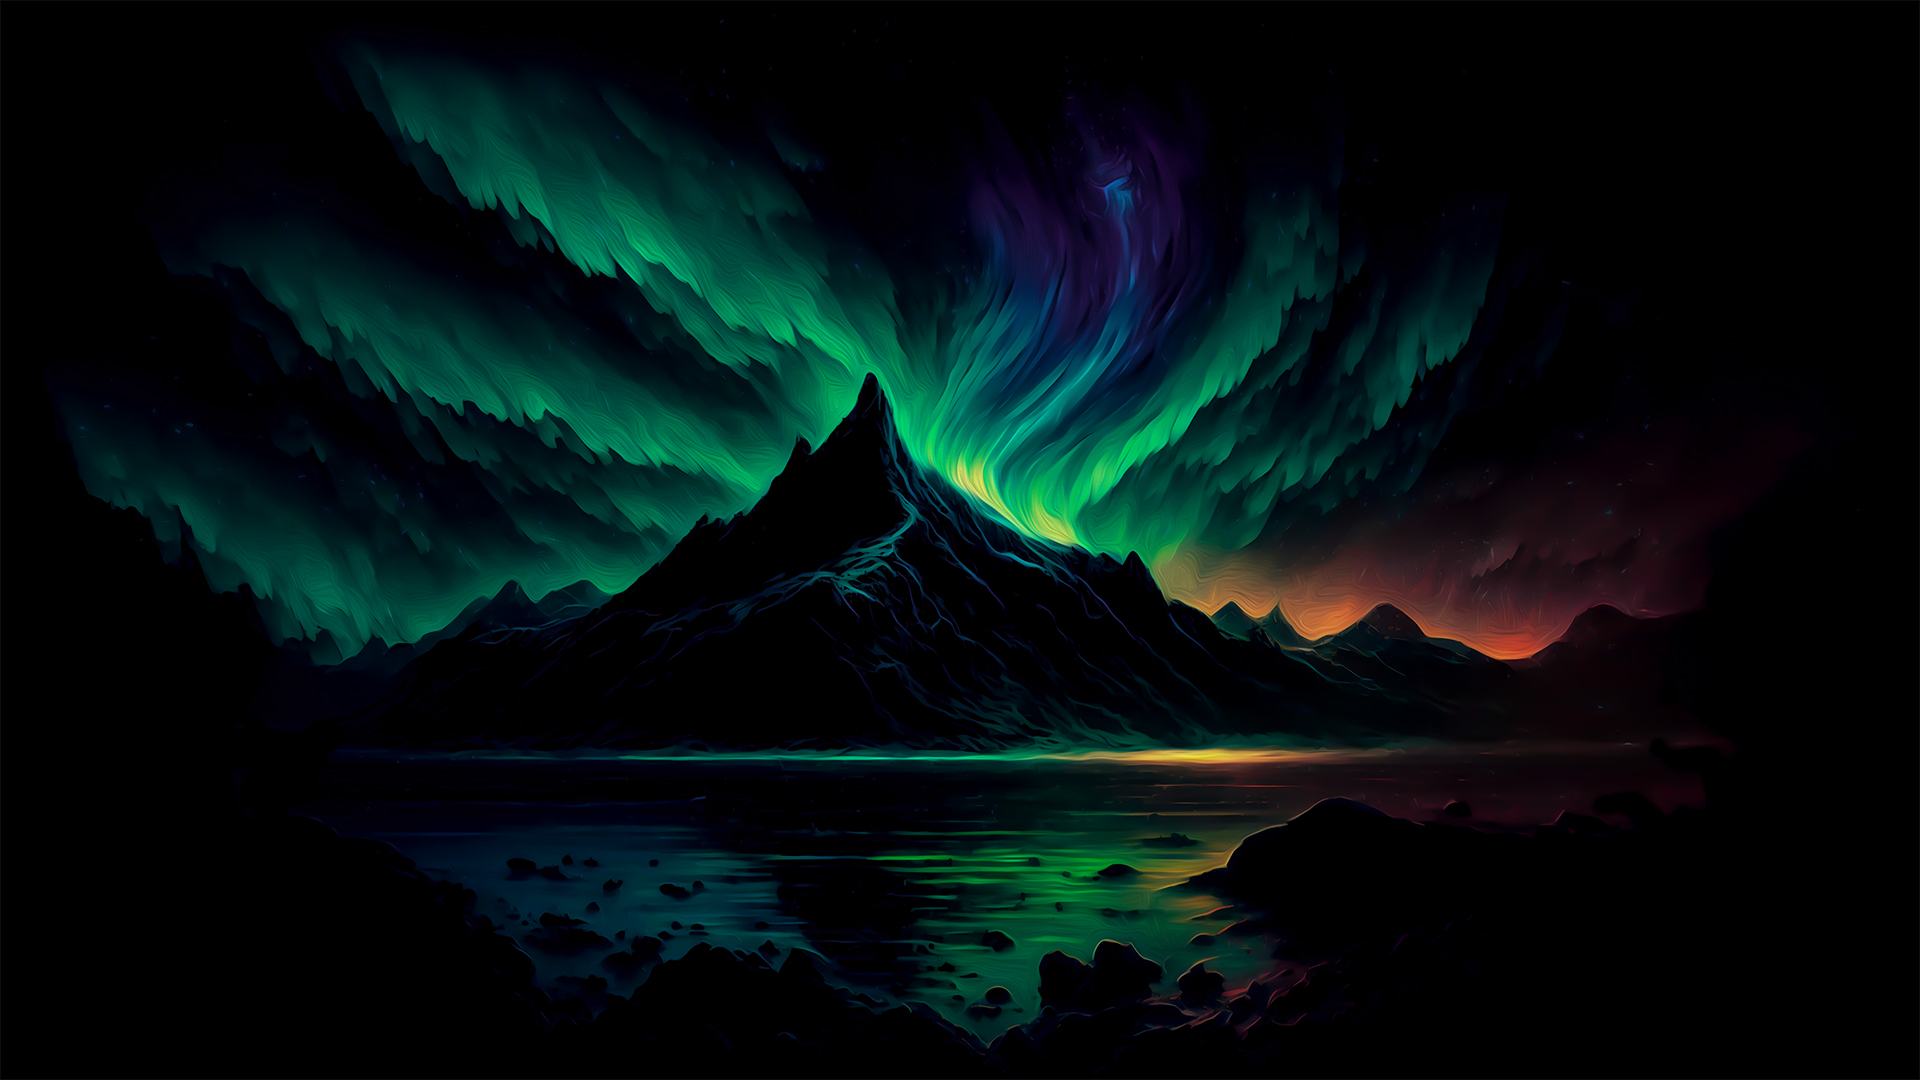 4K Wallpaper for PC: Aurora Borealis Painting Style Illustration